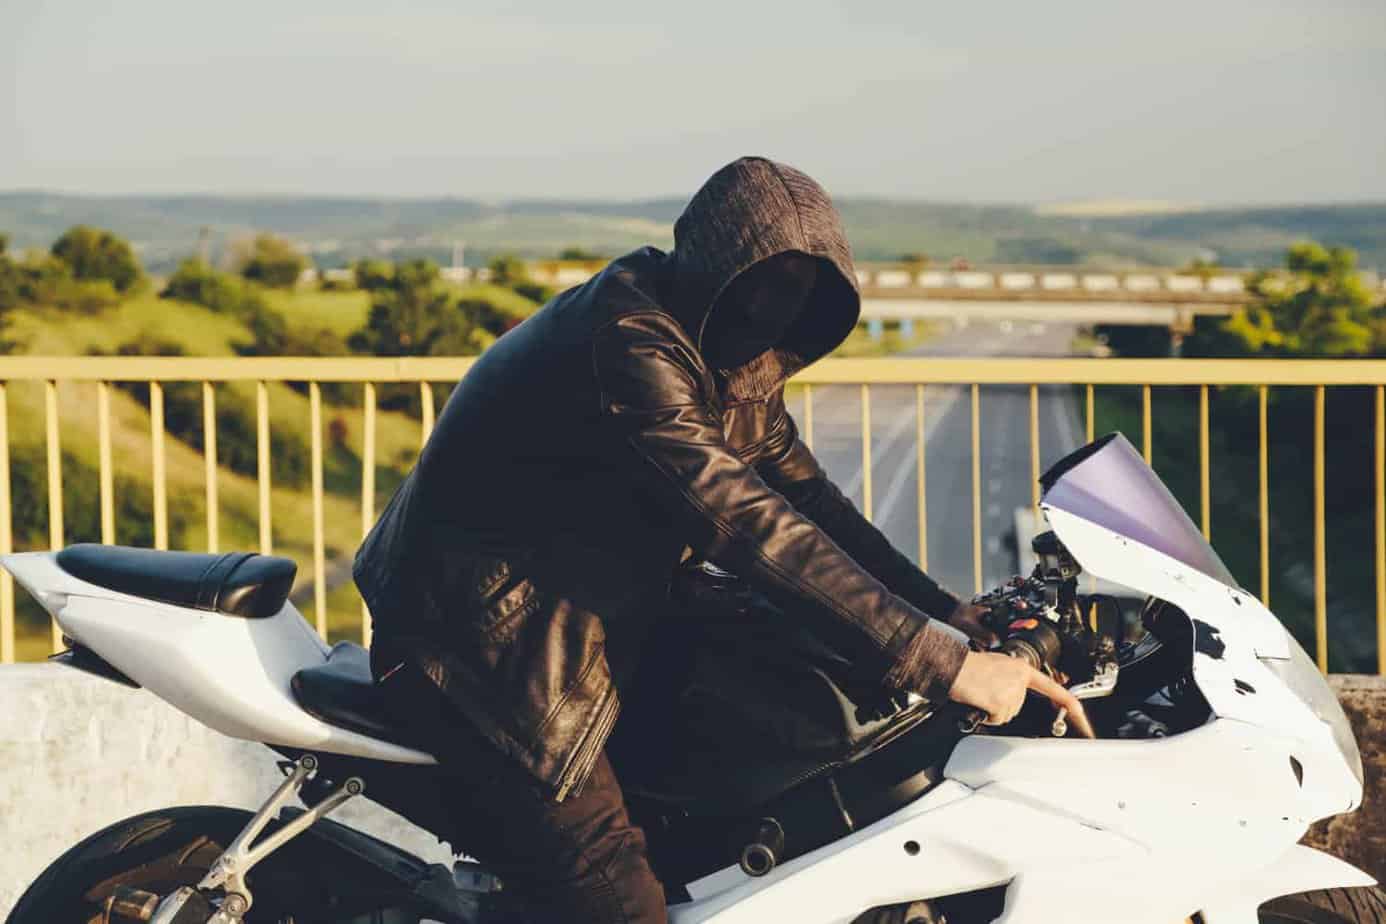 Motorcycle Theft Impact